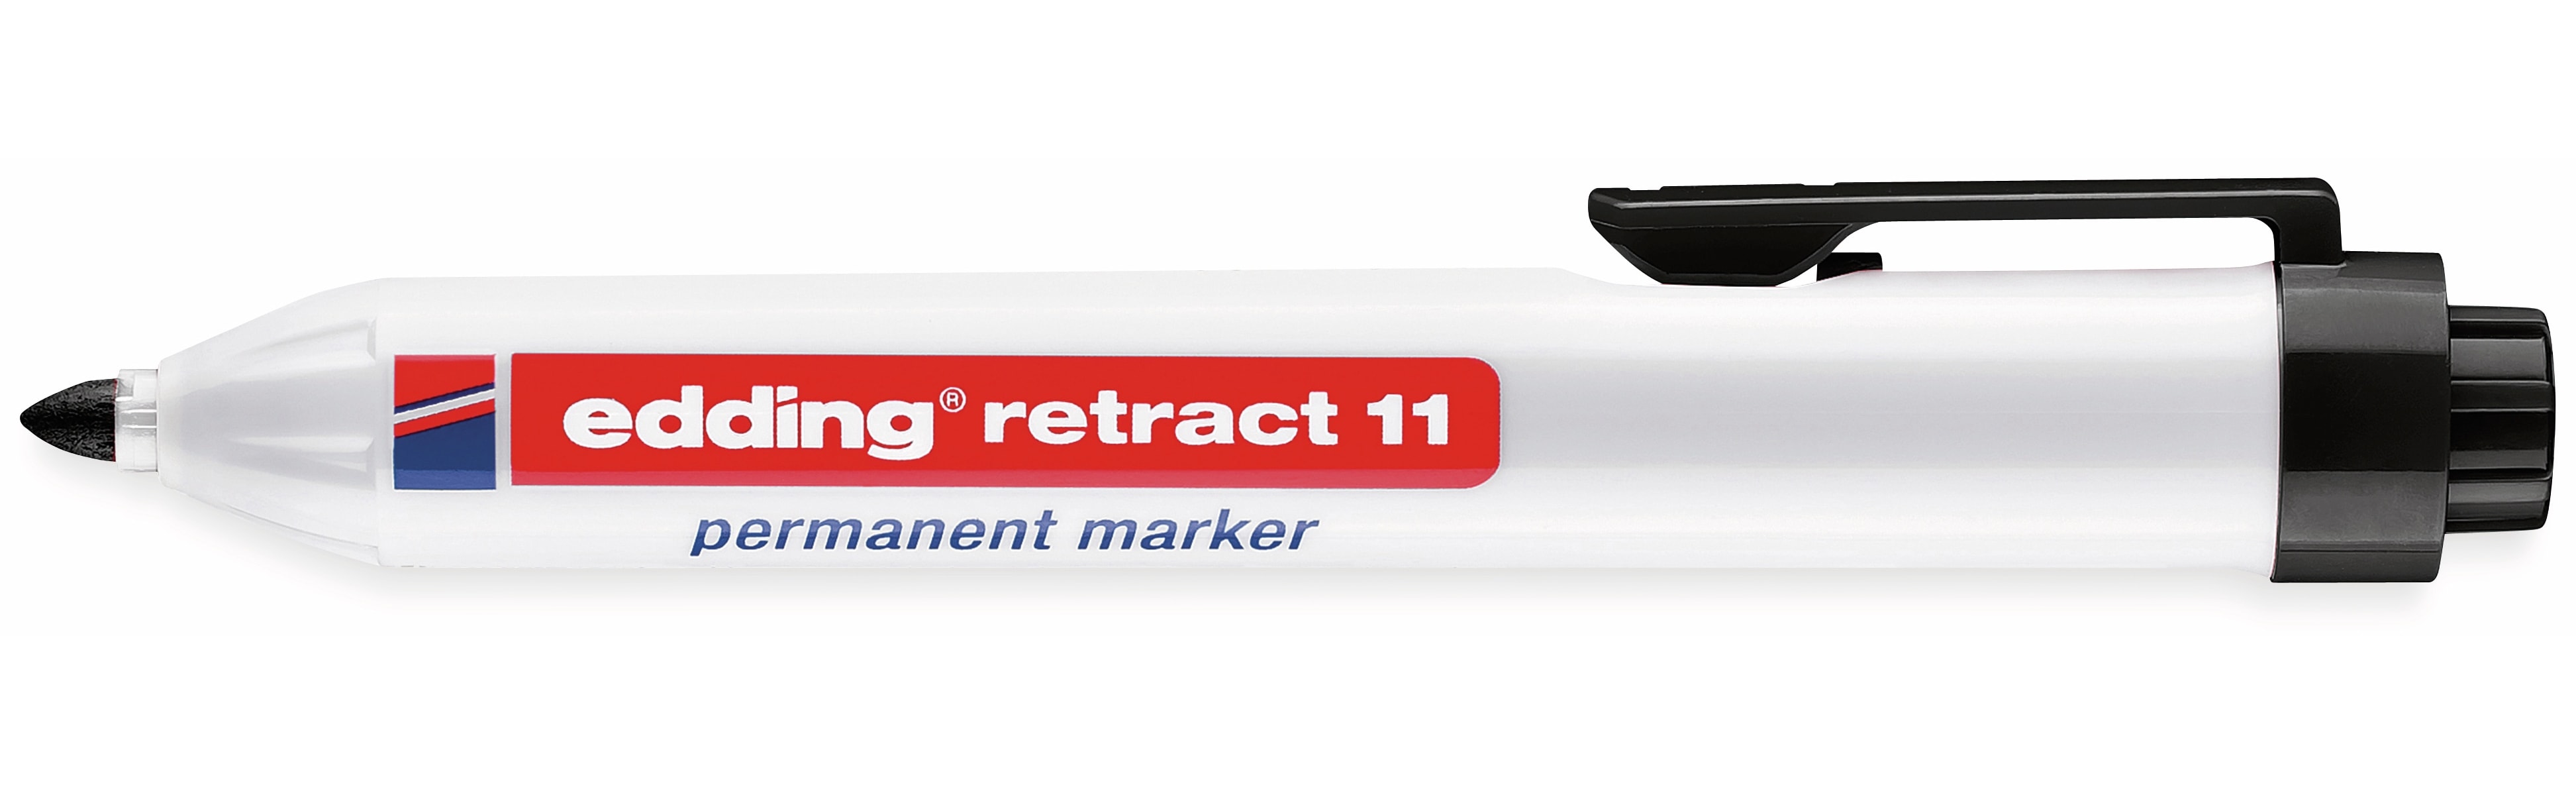 EDDING Permanent-Marker e-11 retract, schwarz